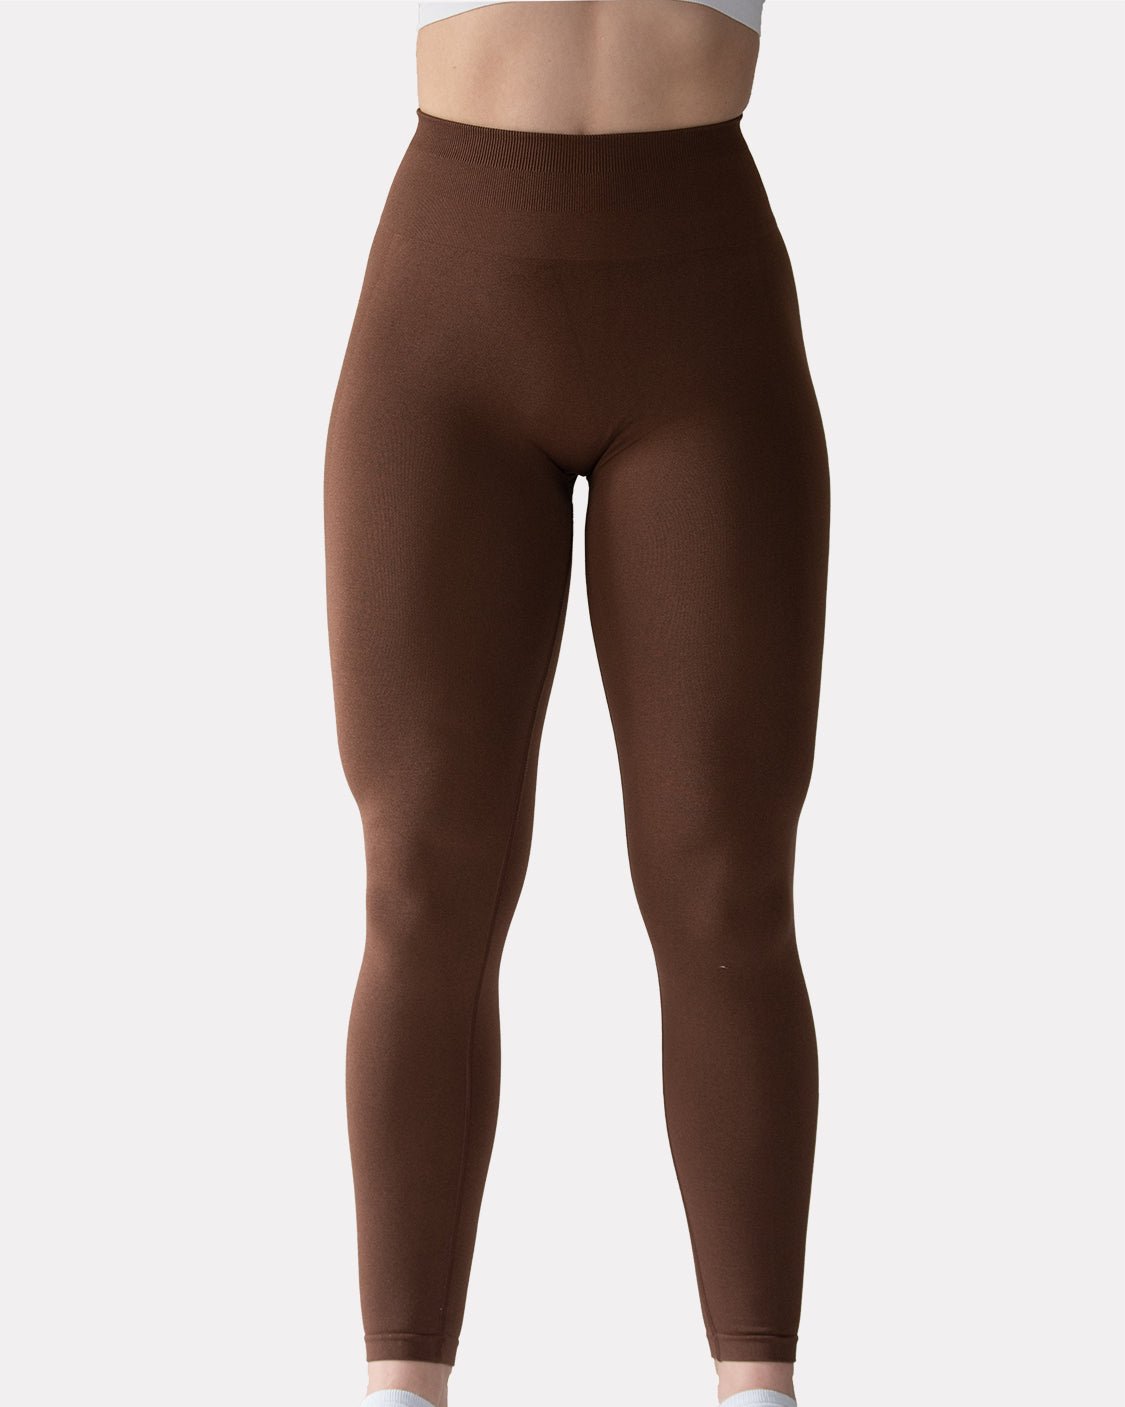 Women's Seamless Nylon Workout Active Solid Plain Capri One Size Leggings ( Brown/Burgundy) - Walmart.com